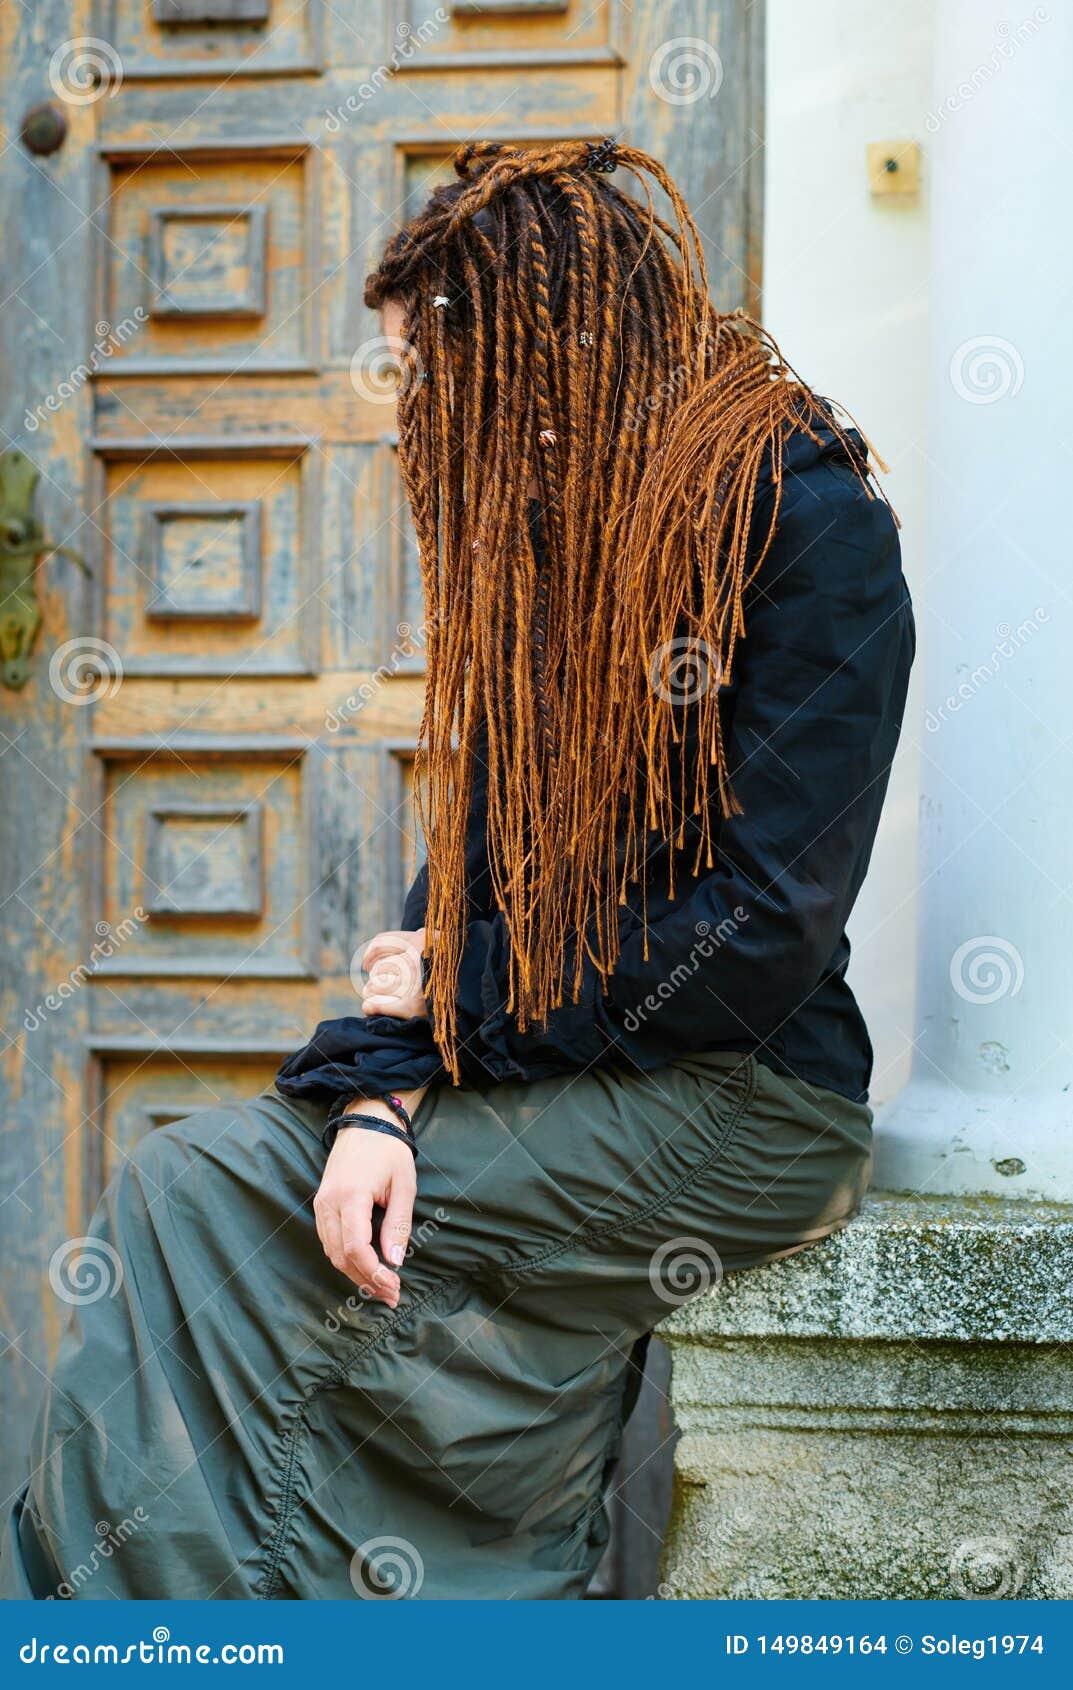 Backside Dreadlocks Head Closeup Fashionable Girl Posing At Old Wooden Door  Background Stock Photo - Download Image Now - iStock